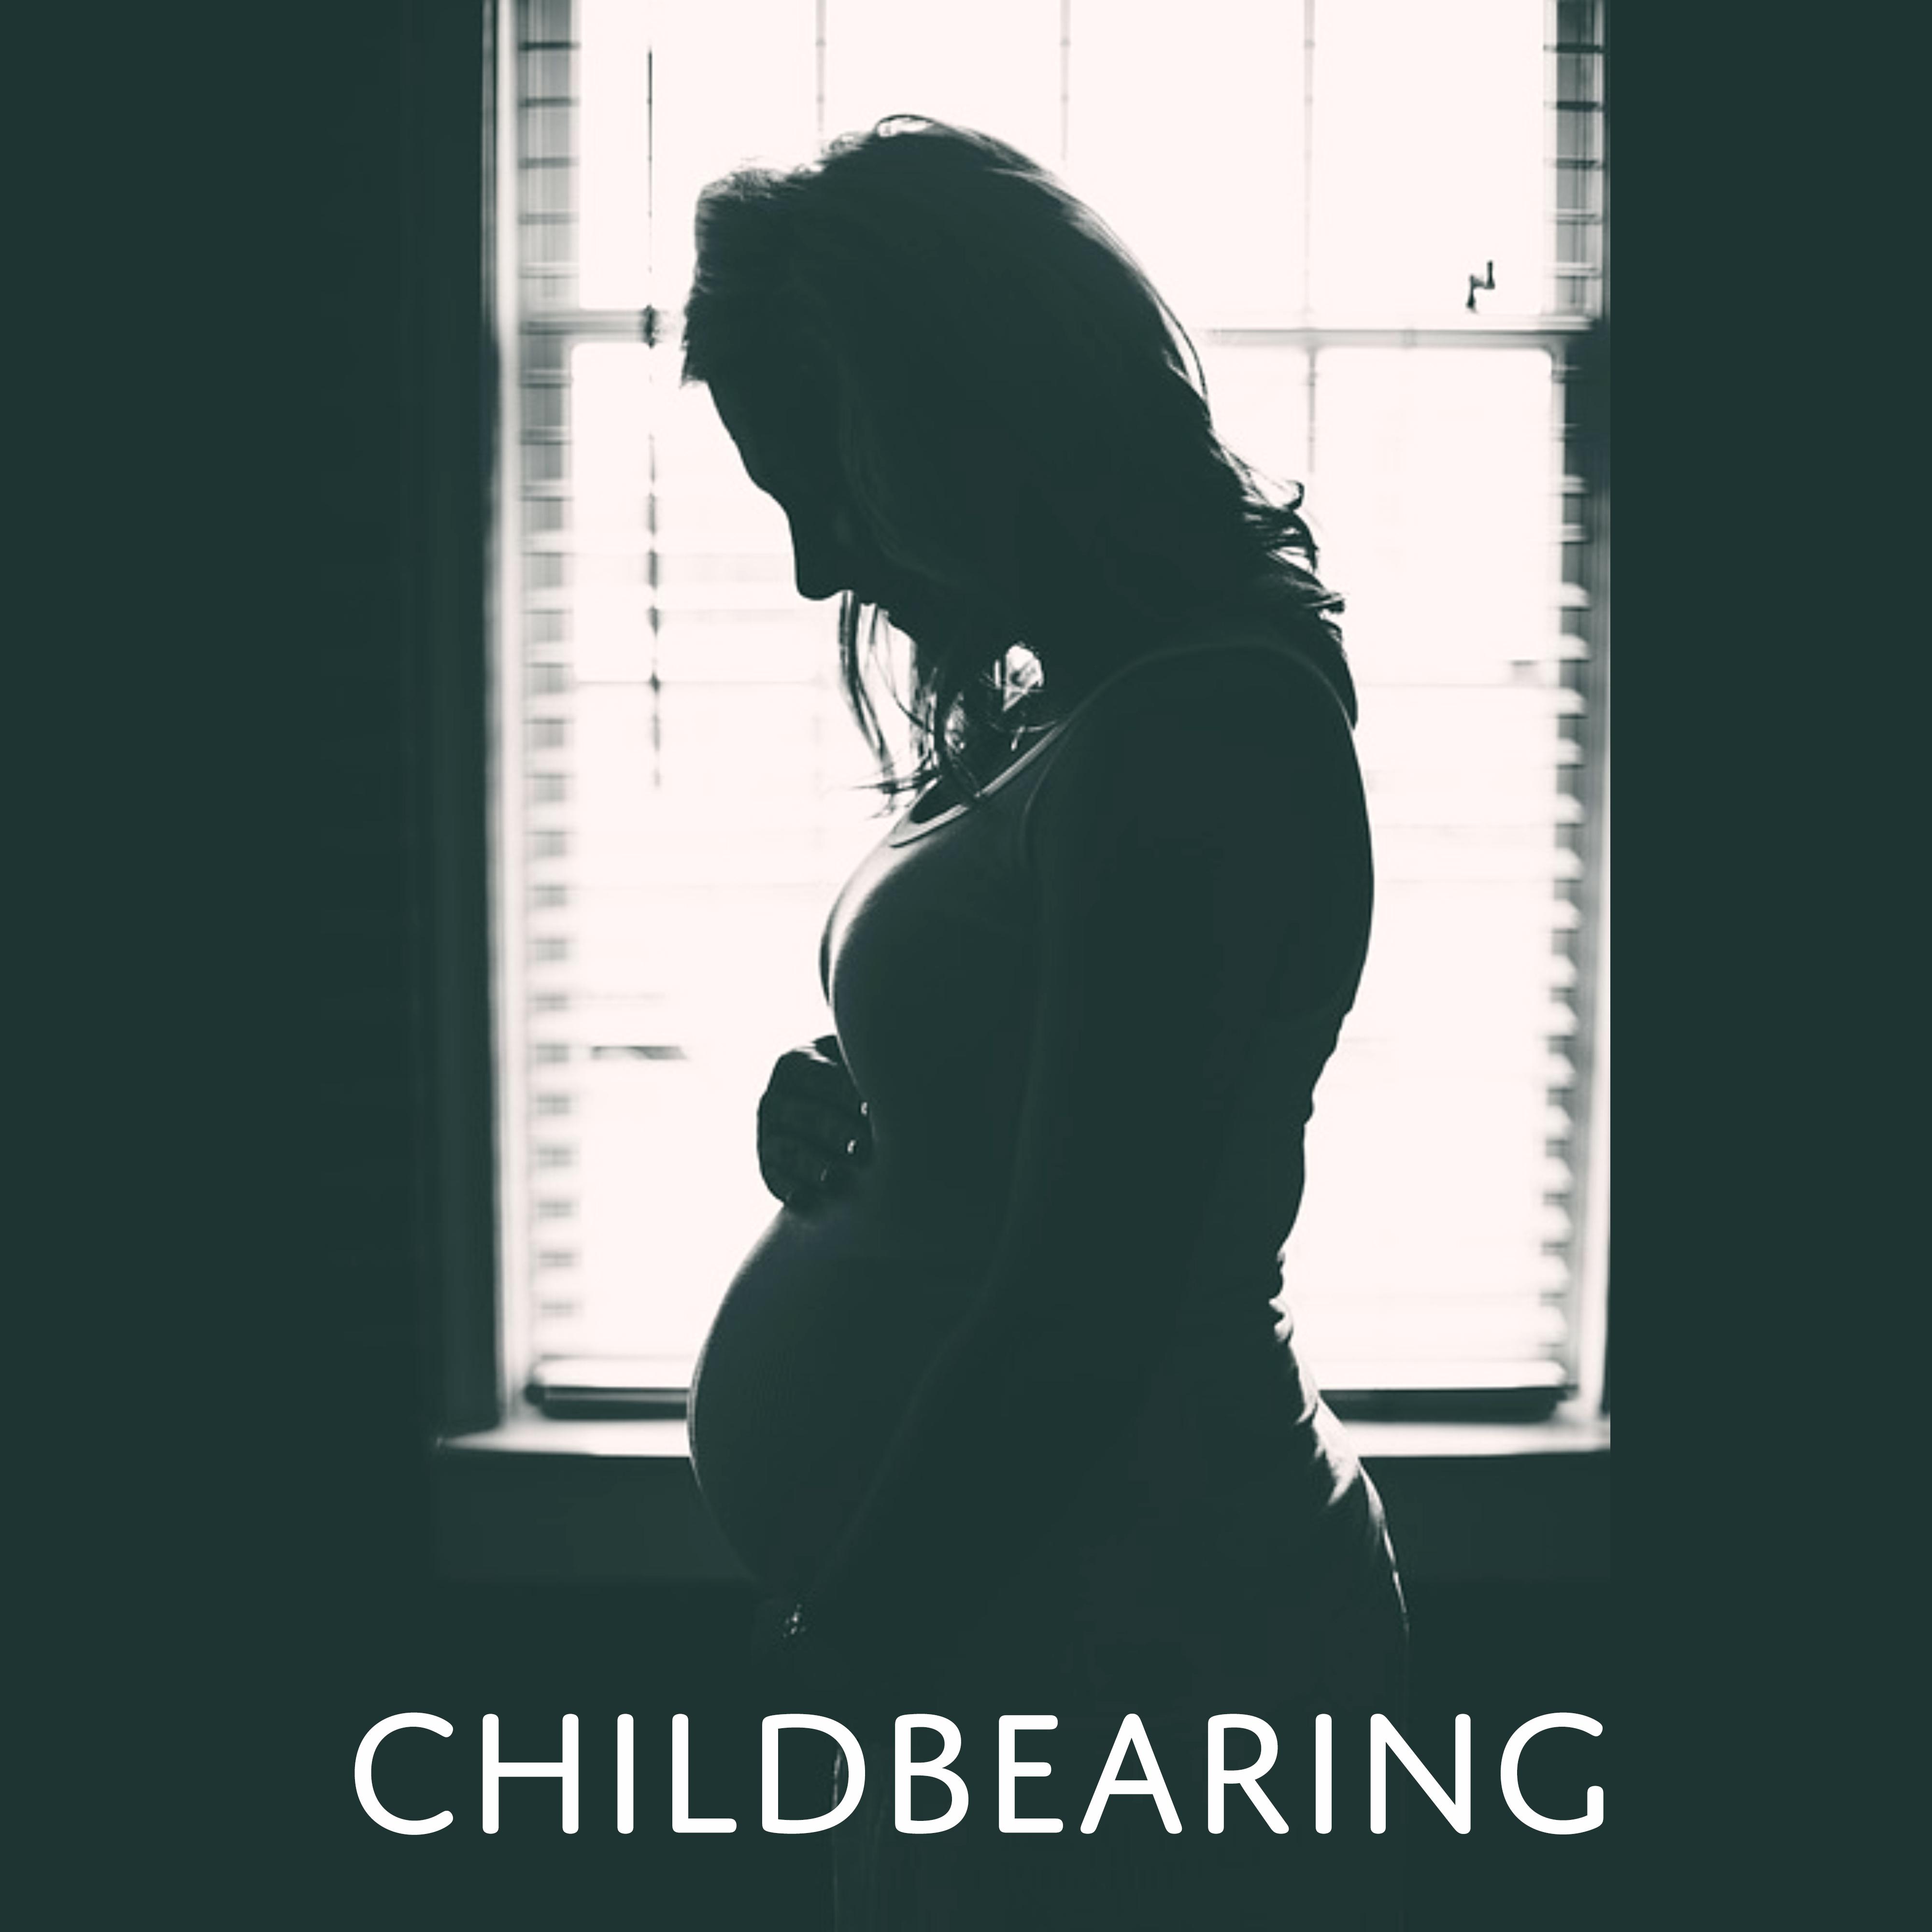 Childbearing - Wonderful Pregnancy, Looseness, Without Stress, Waiting Time